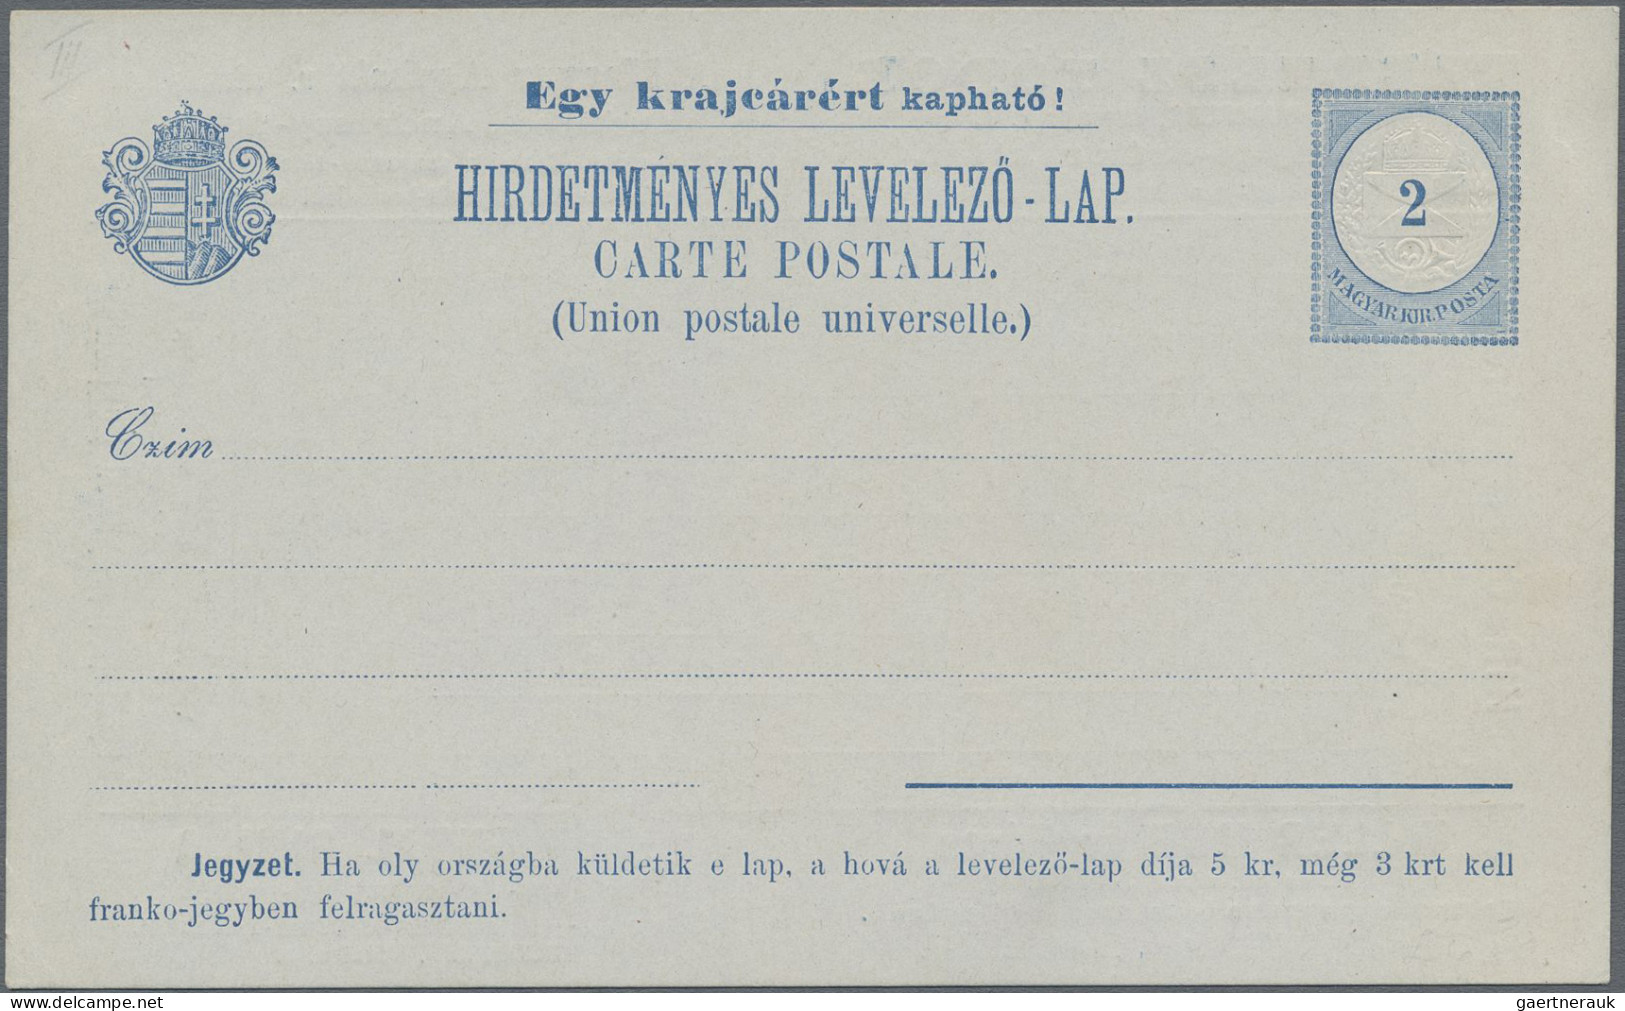 Hungary - Postal Stationary: 1892, 2 Kr blau Privat-Anzeigenpostkarte, komplette